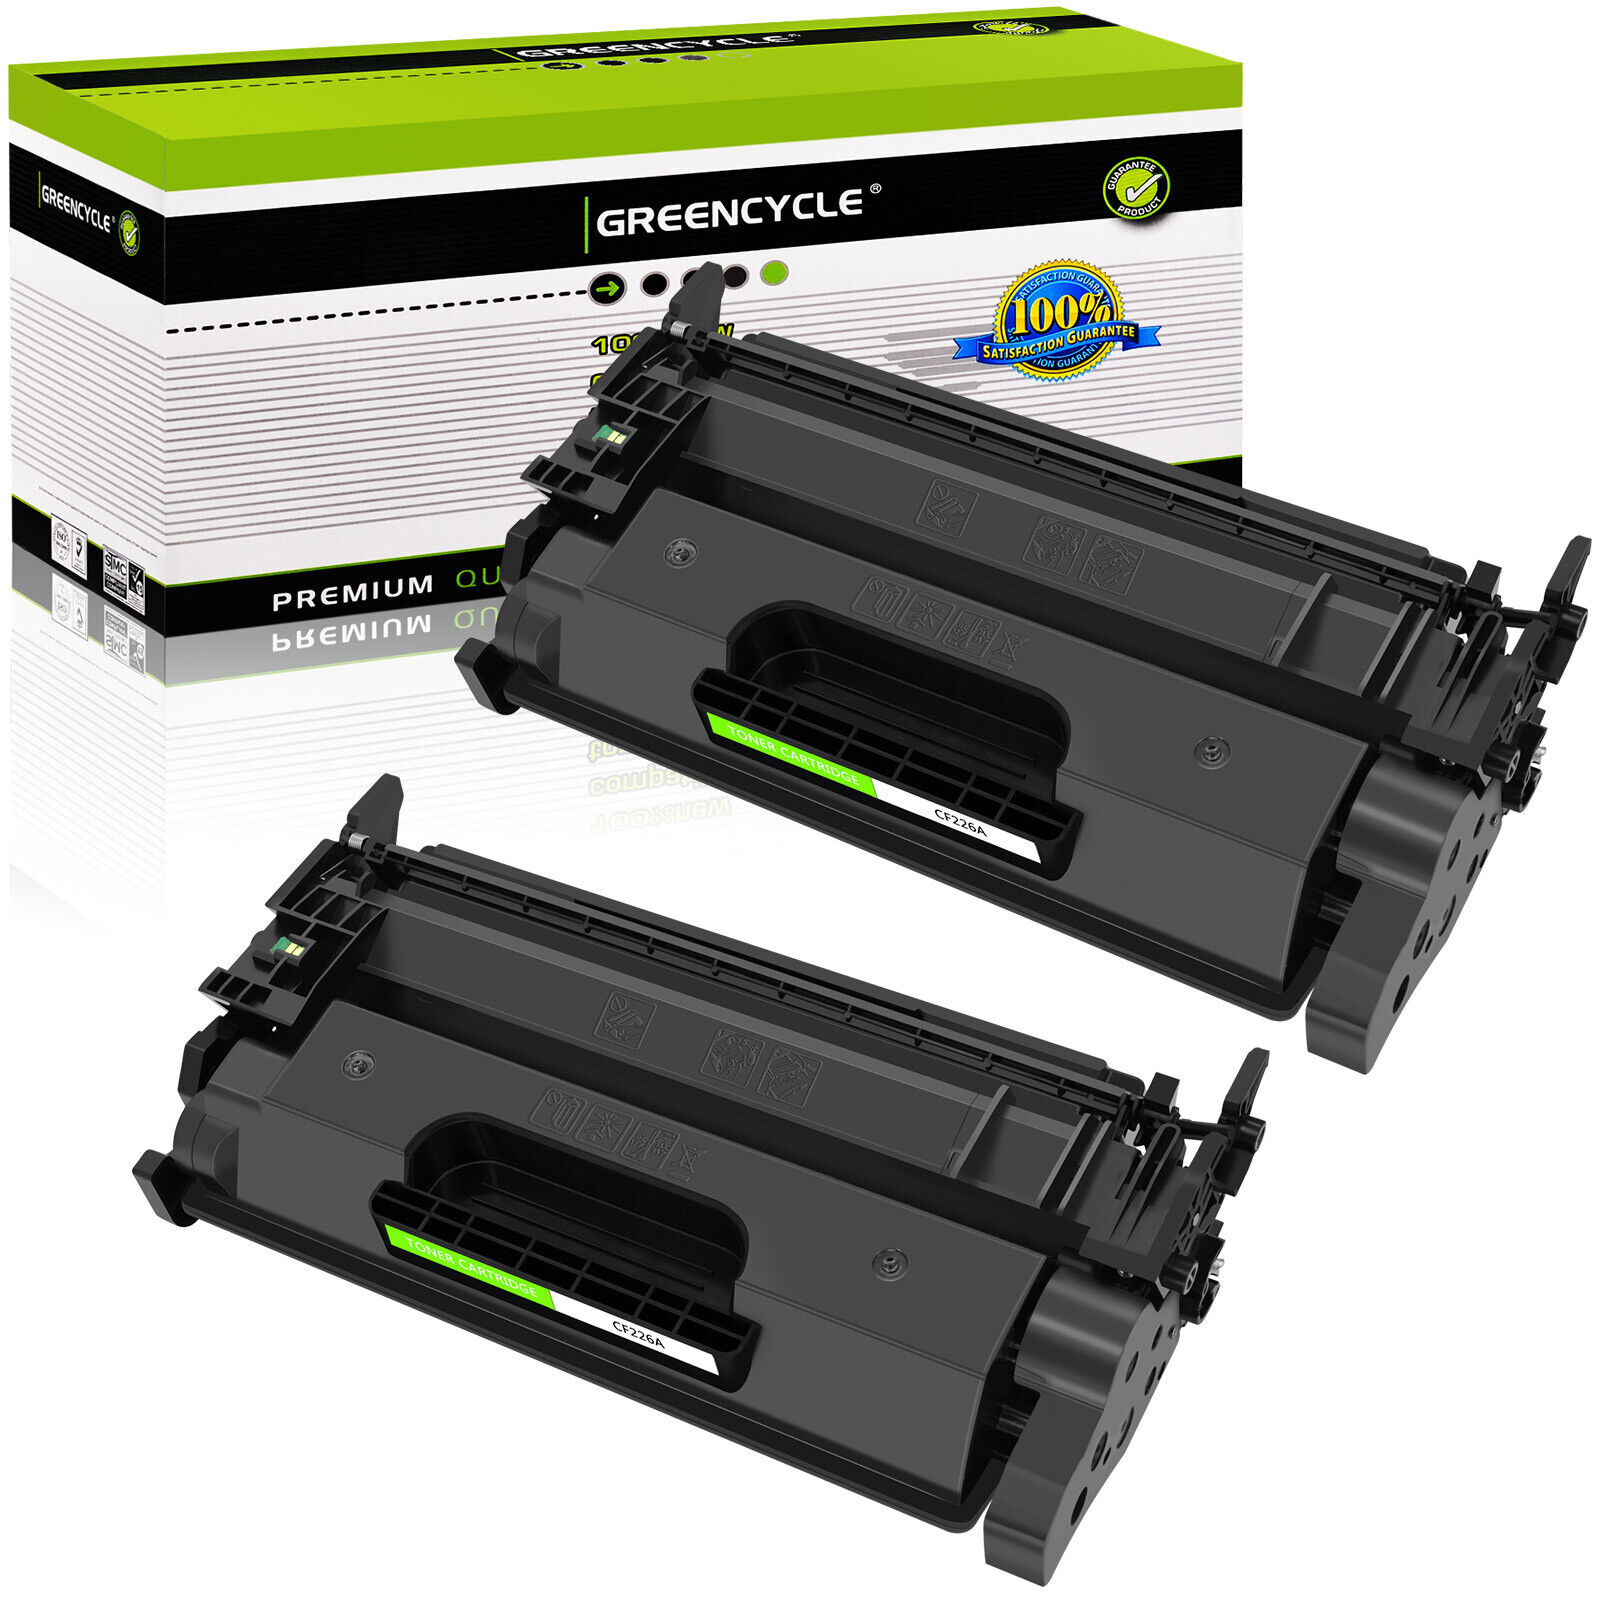 GREENCYCLE 2PK CF226A 26A Toner Cartridges For HP Laserjet Pro M402n MFP M426fdw